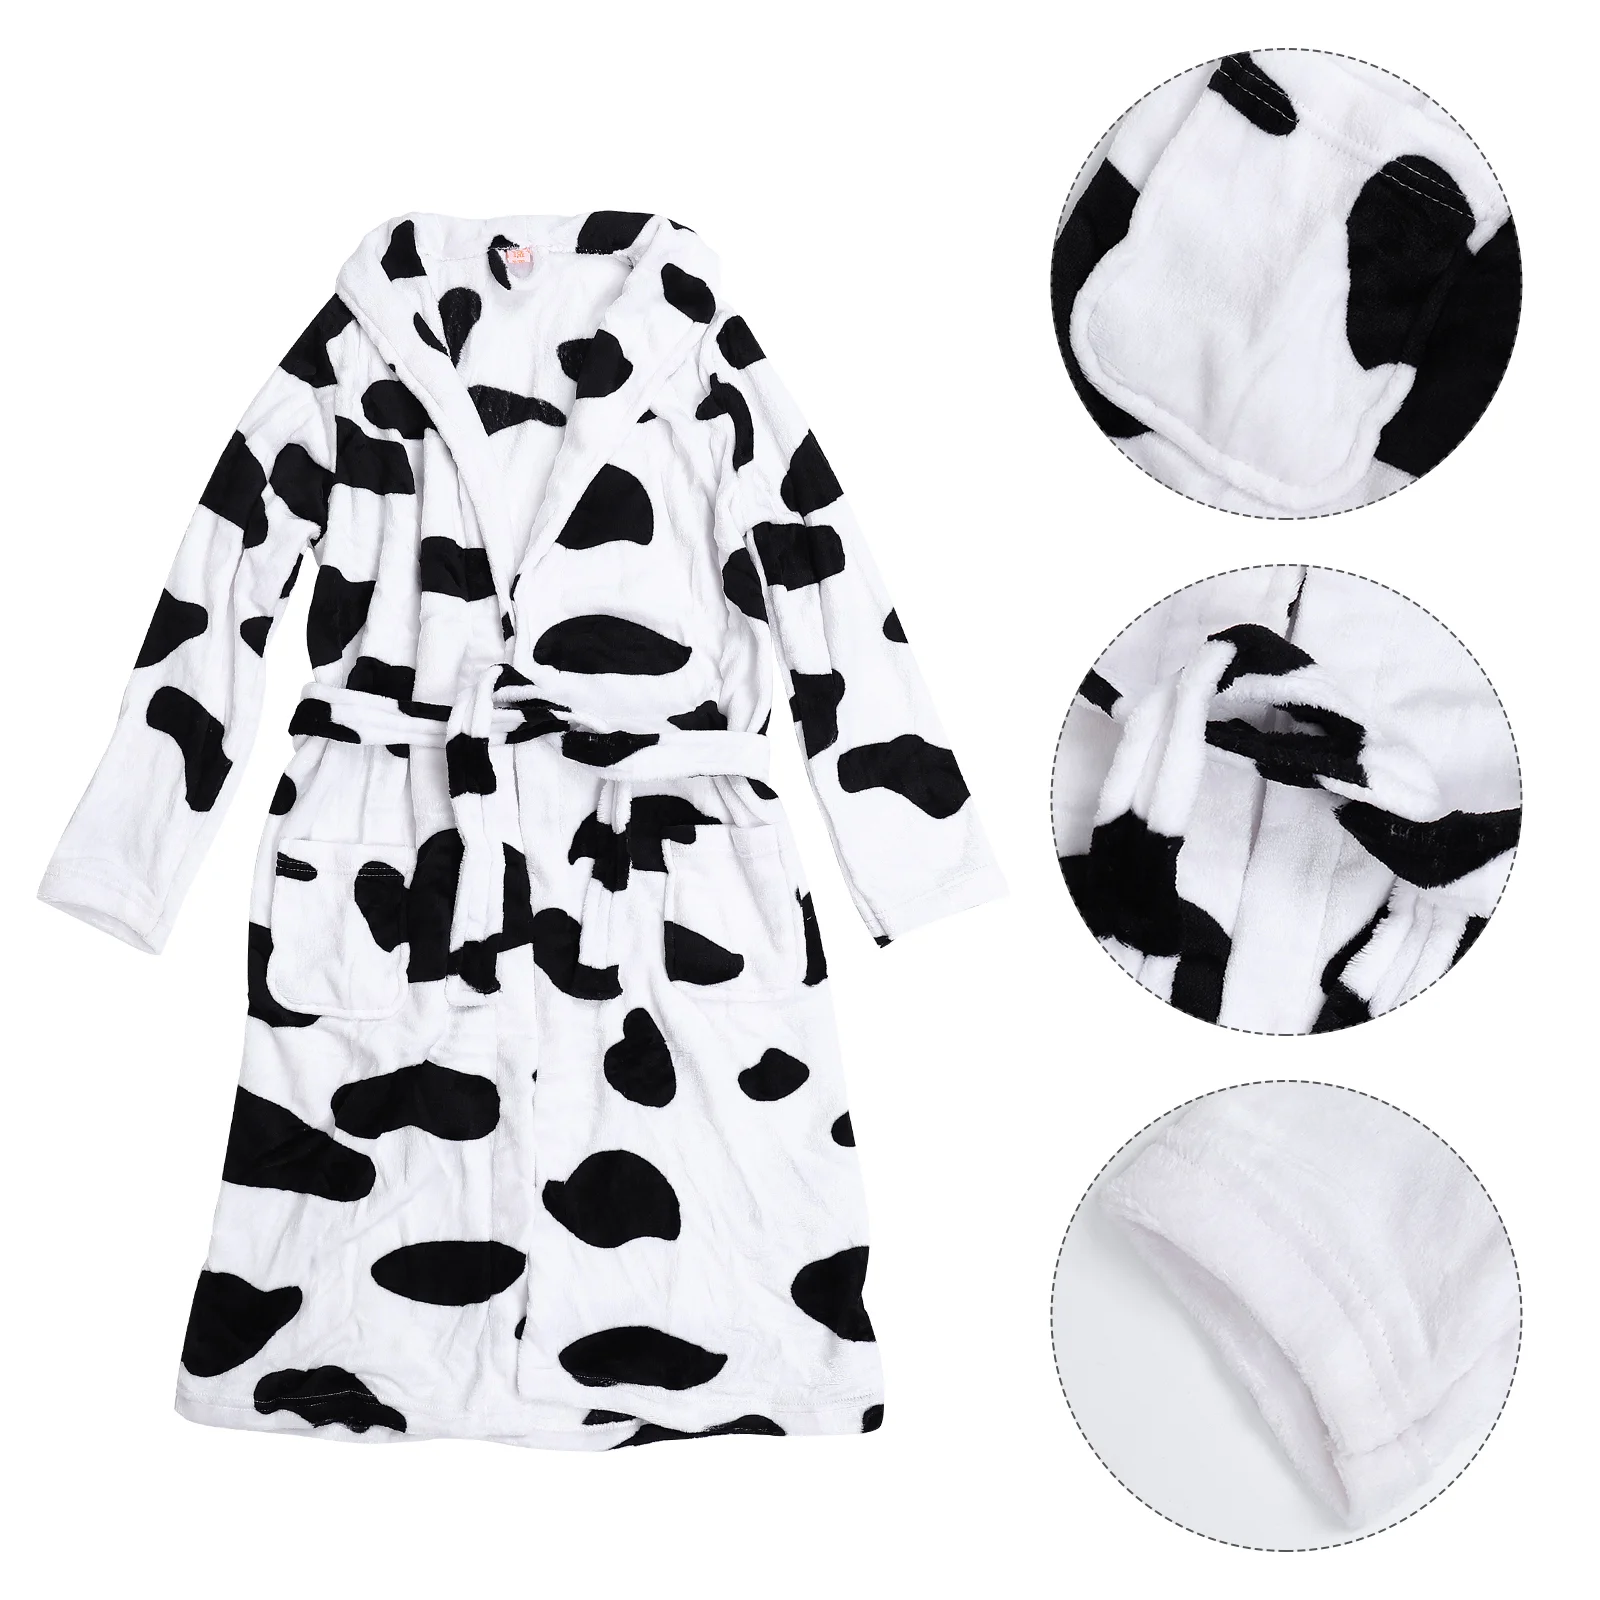 

Cow Pajamas Girl Sleepwear Bathrobe for Girls Coral Fleece Nightgown Robes Nightclothes Long Sleeve Nightdress Romper